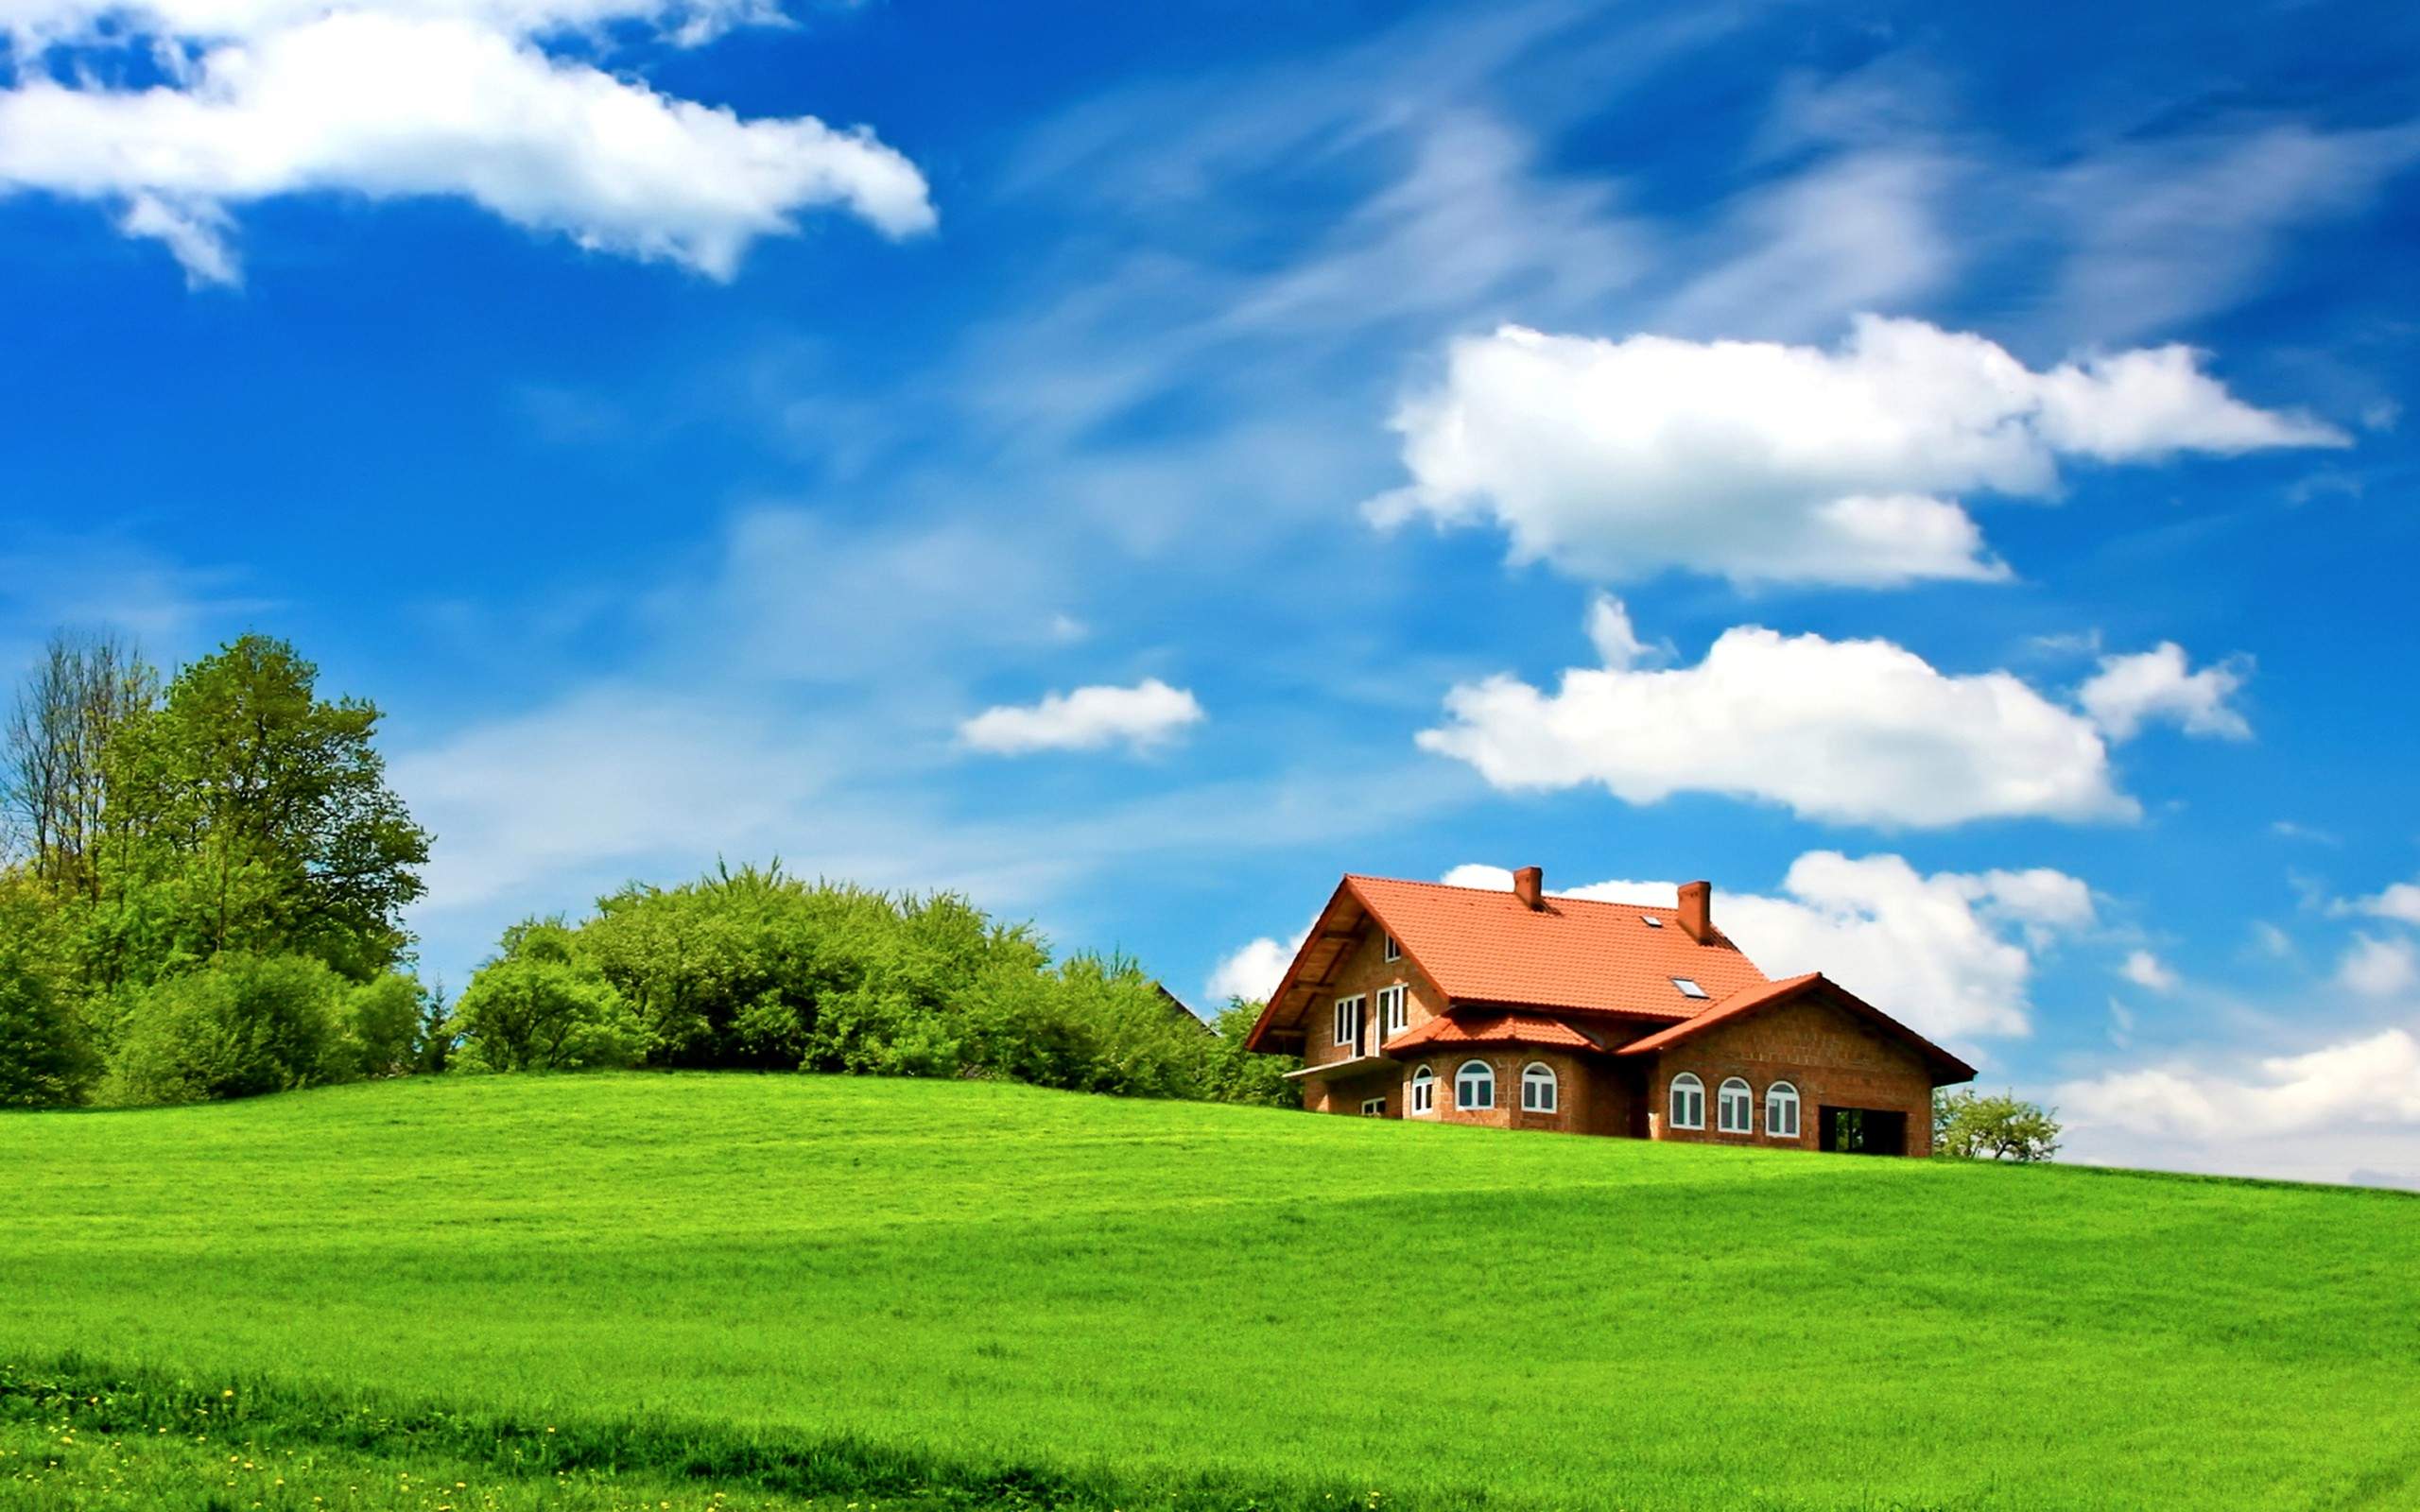 🔥 Download Green Field House Landscape Wallpaper For Desktop High